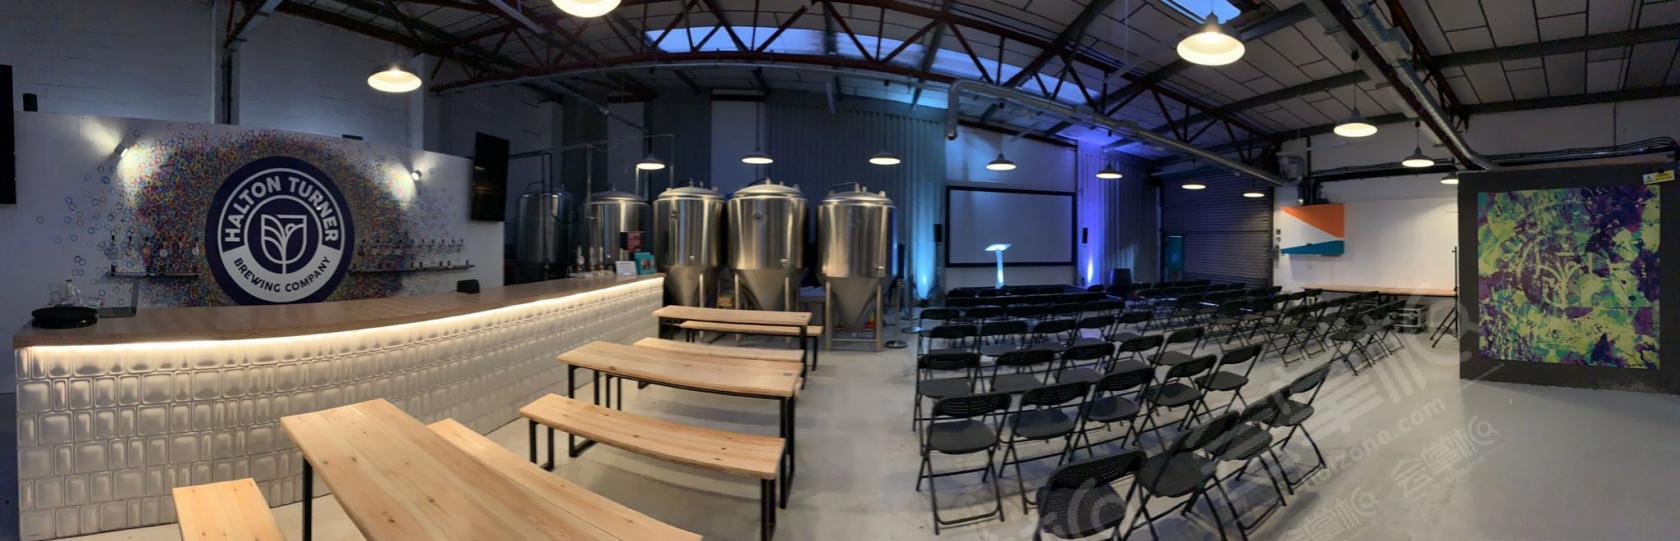 Halton Turner Brewery (Event Space)